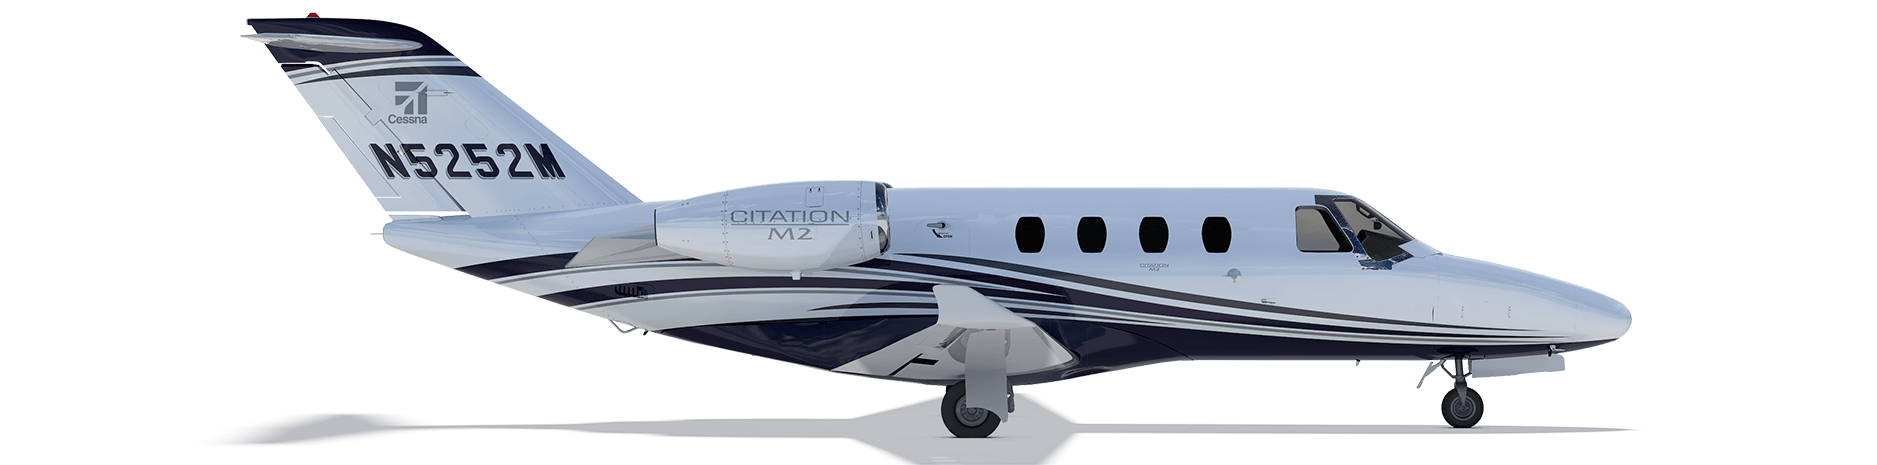 Airborne Private Jet-Cessna-Citation-525